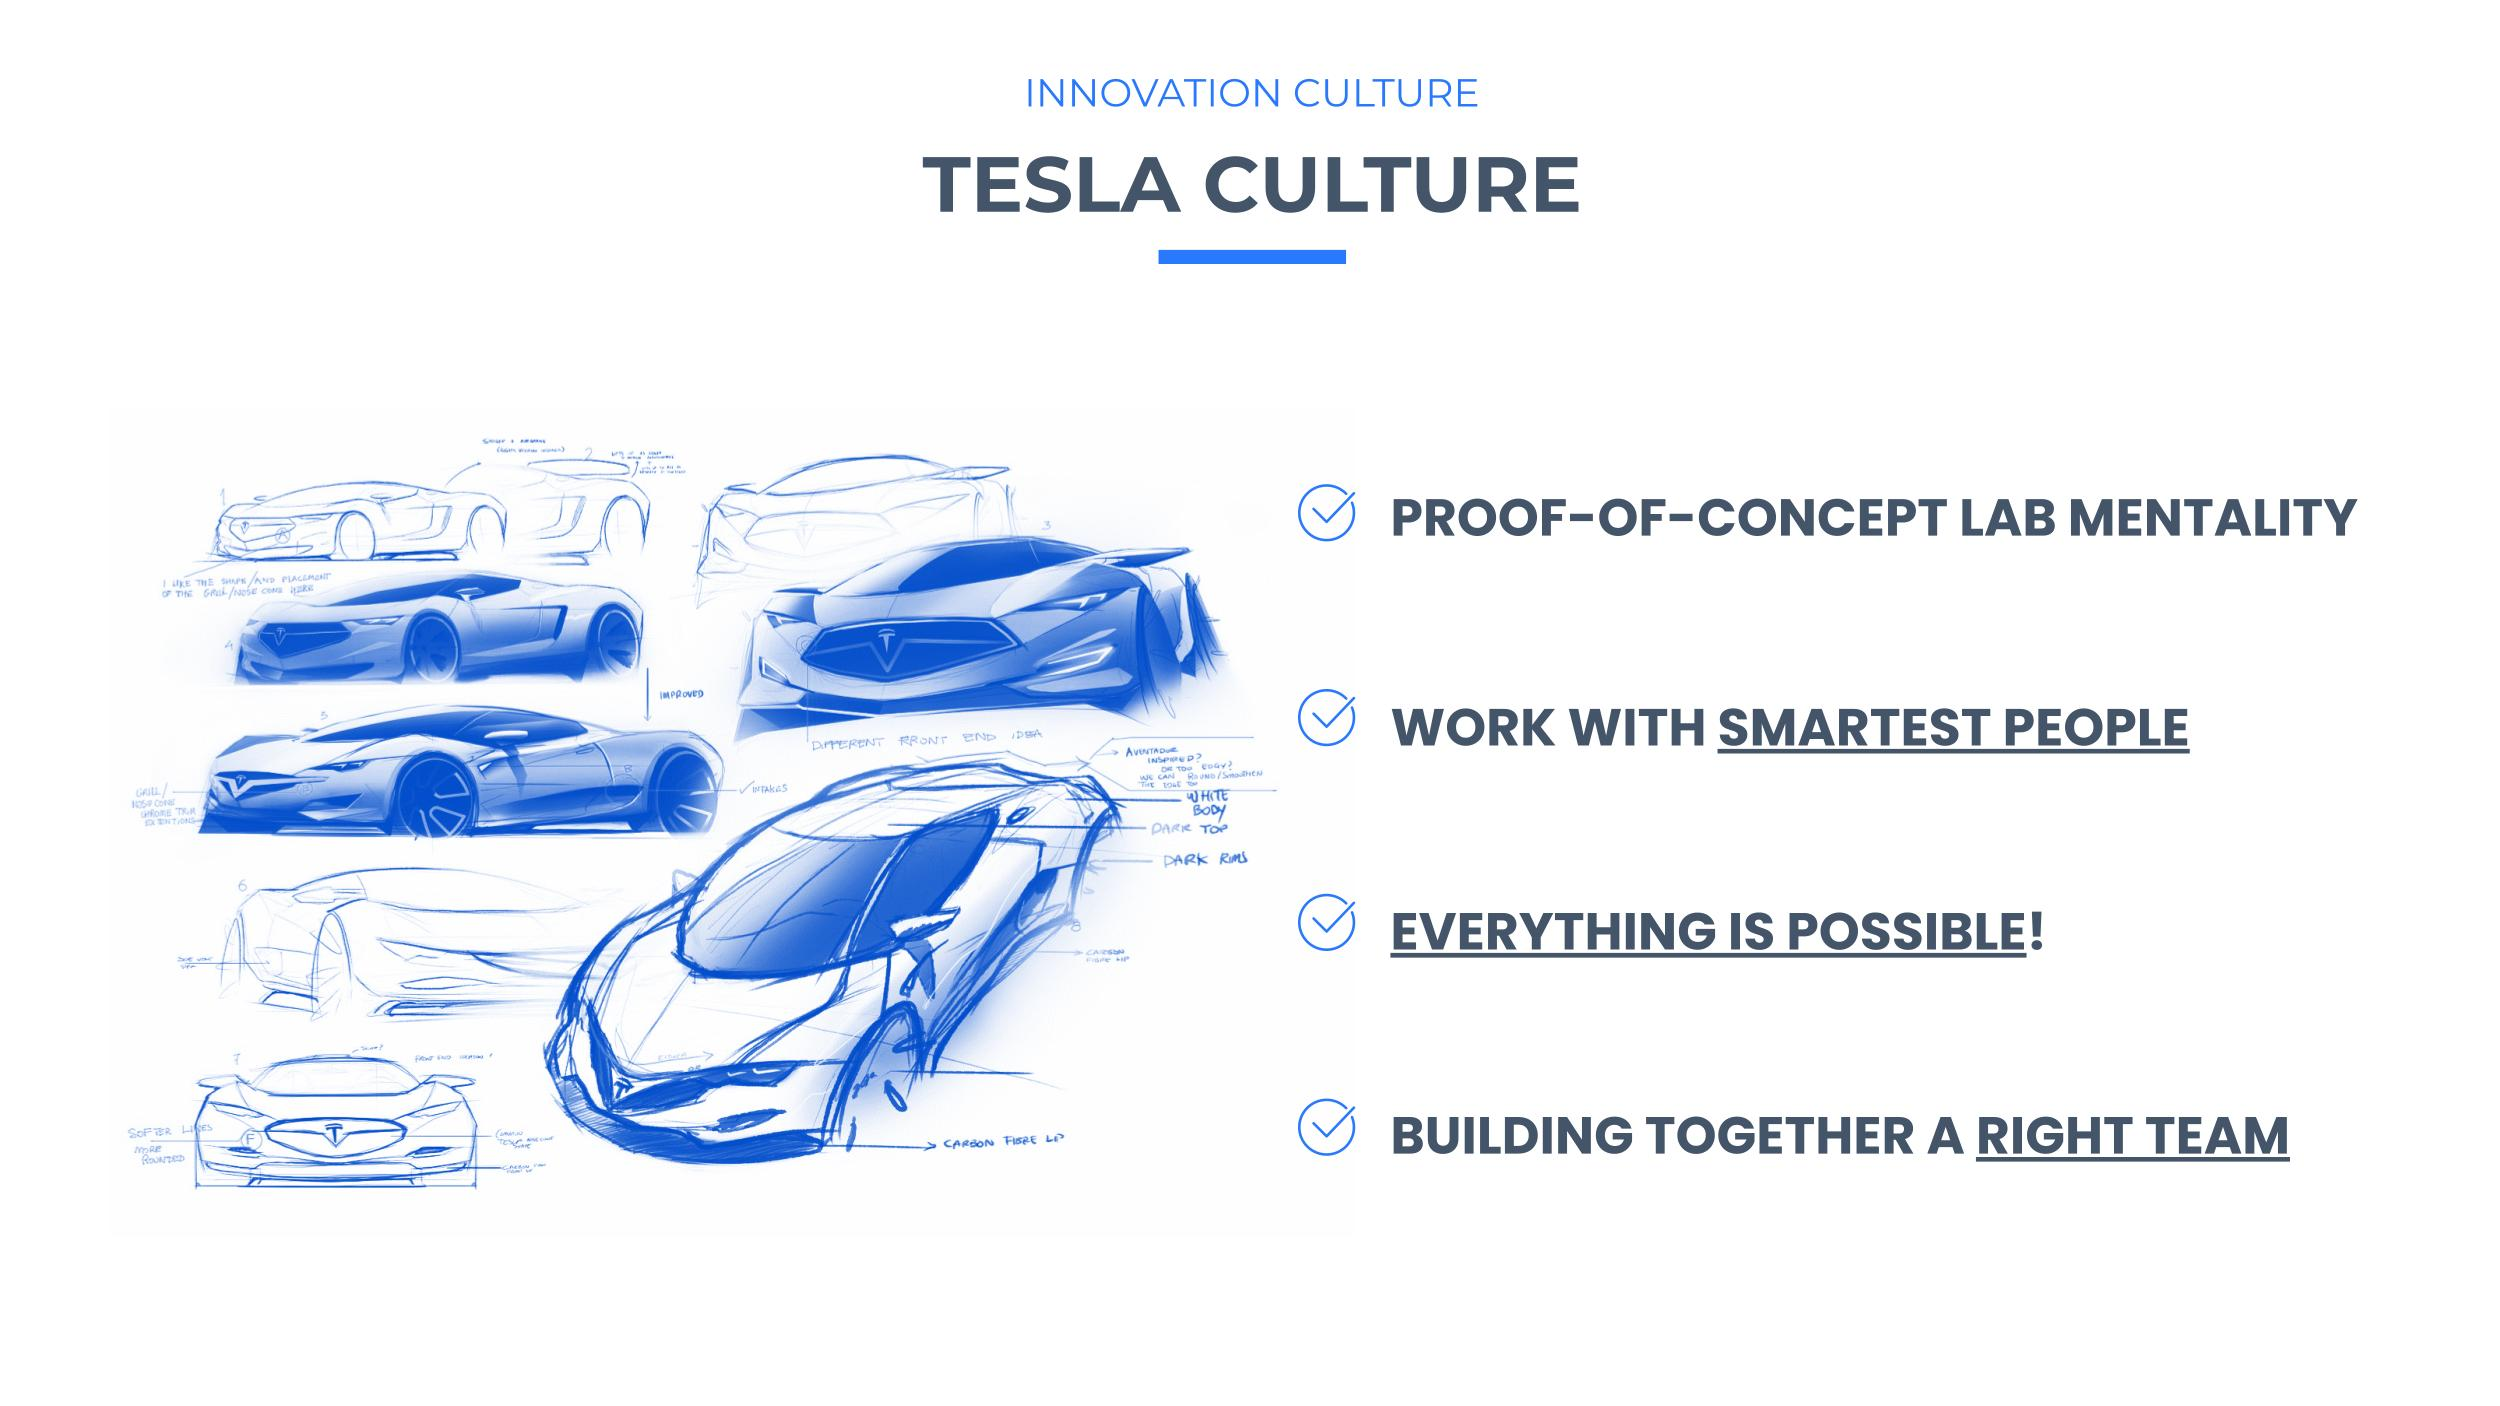 Teams in Tesla set "impossible" goals